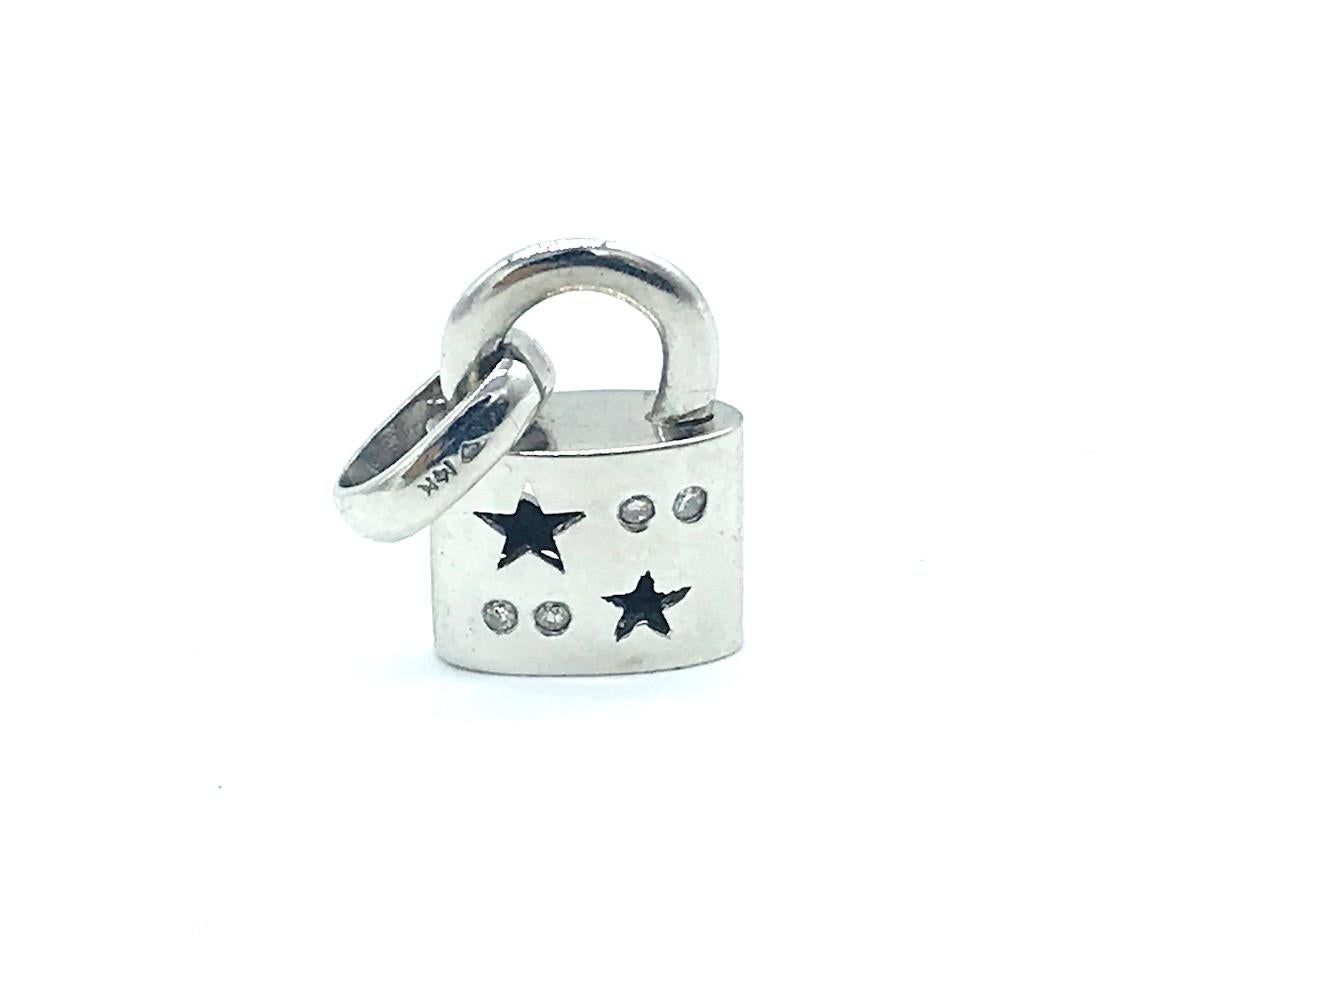 Contemporary Diamond Lock Charm with Stars, 14 Karat White Gold Pendant